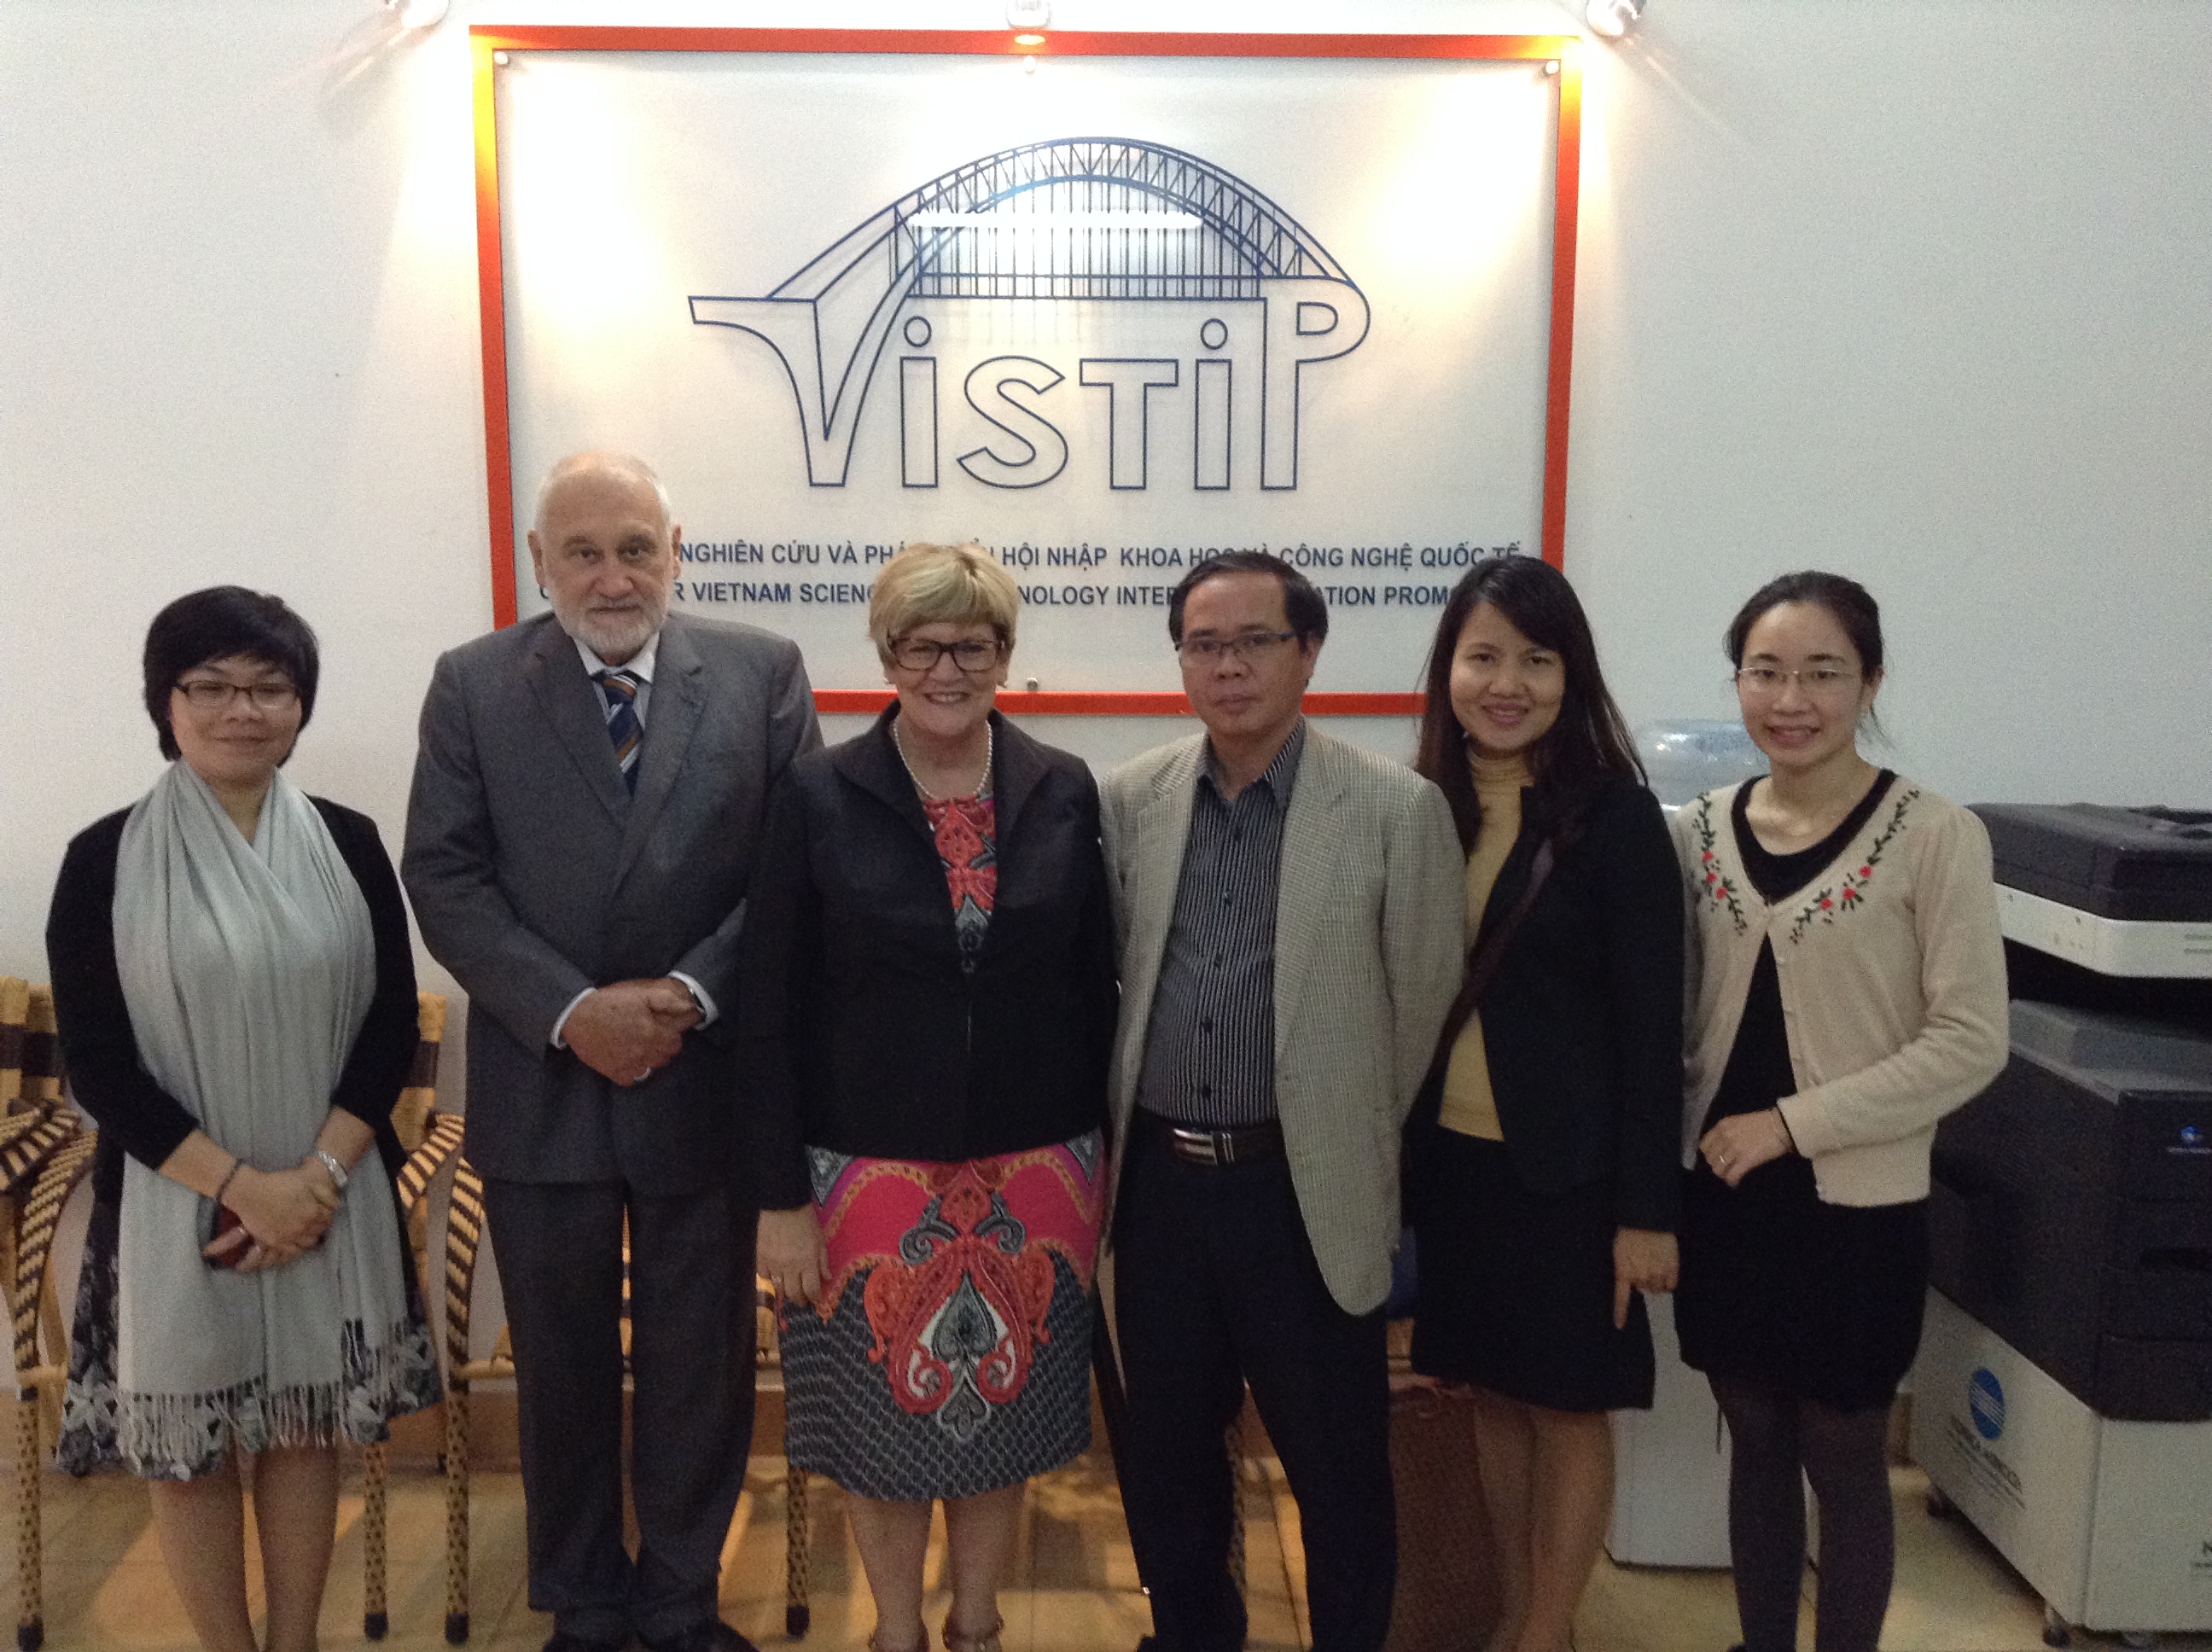 Photo with VISTIP team (1)